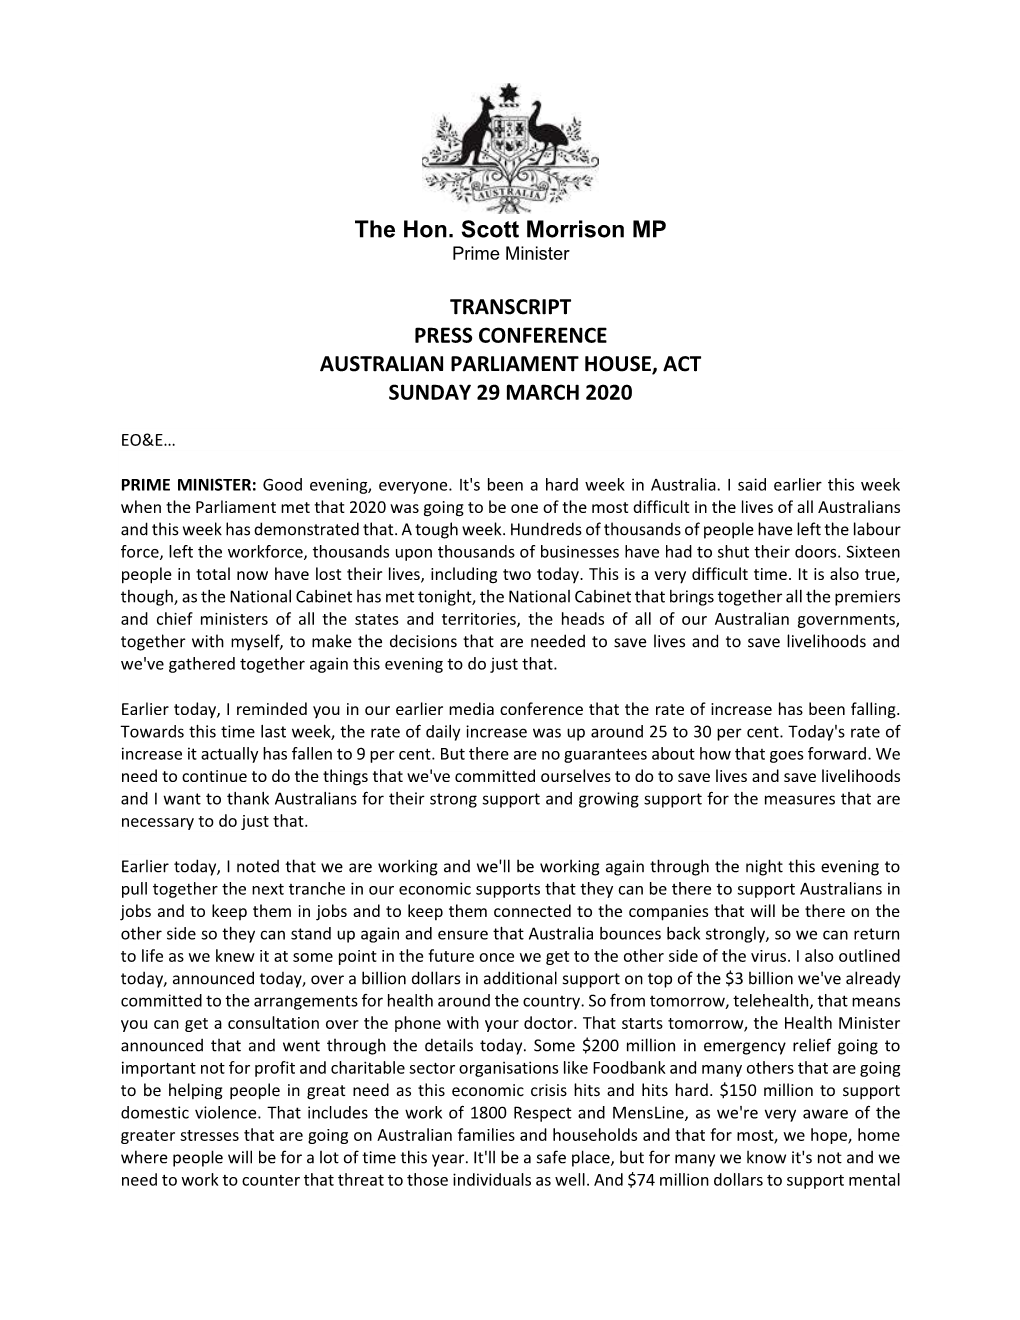 Transcript Press Conference Australian Parliament House, Act Sunday 29 March 2020